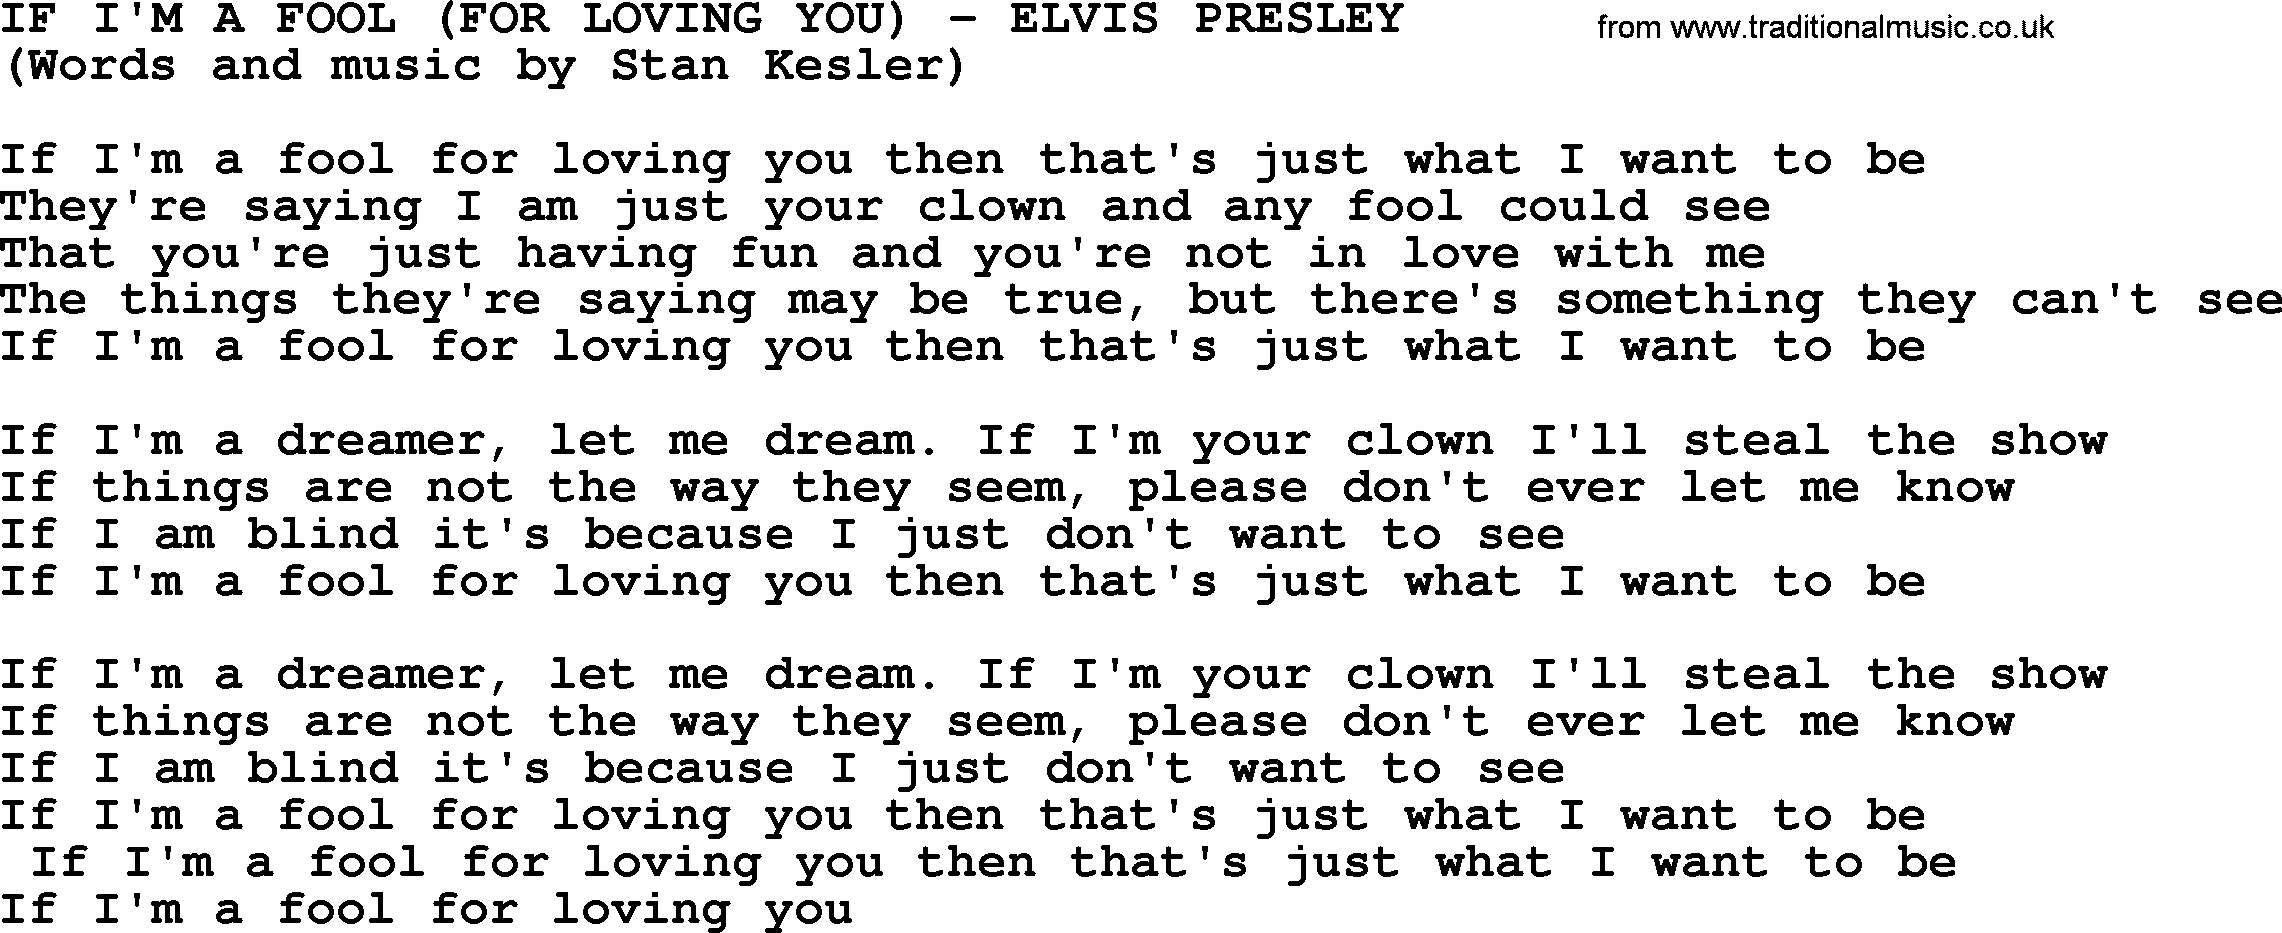 Elvis Presley song: If I'm A Fool (For Loving You) lyrics